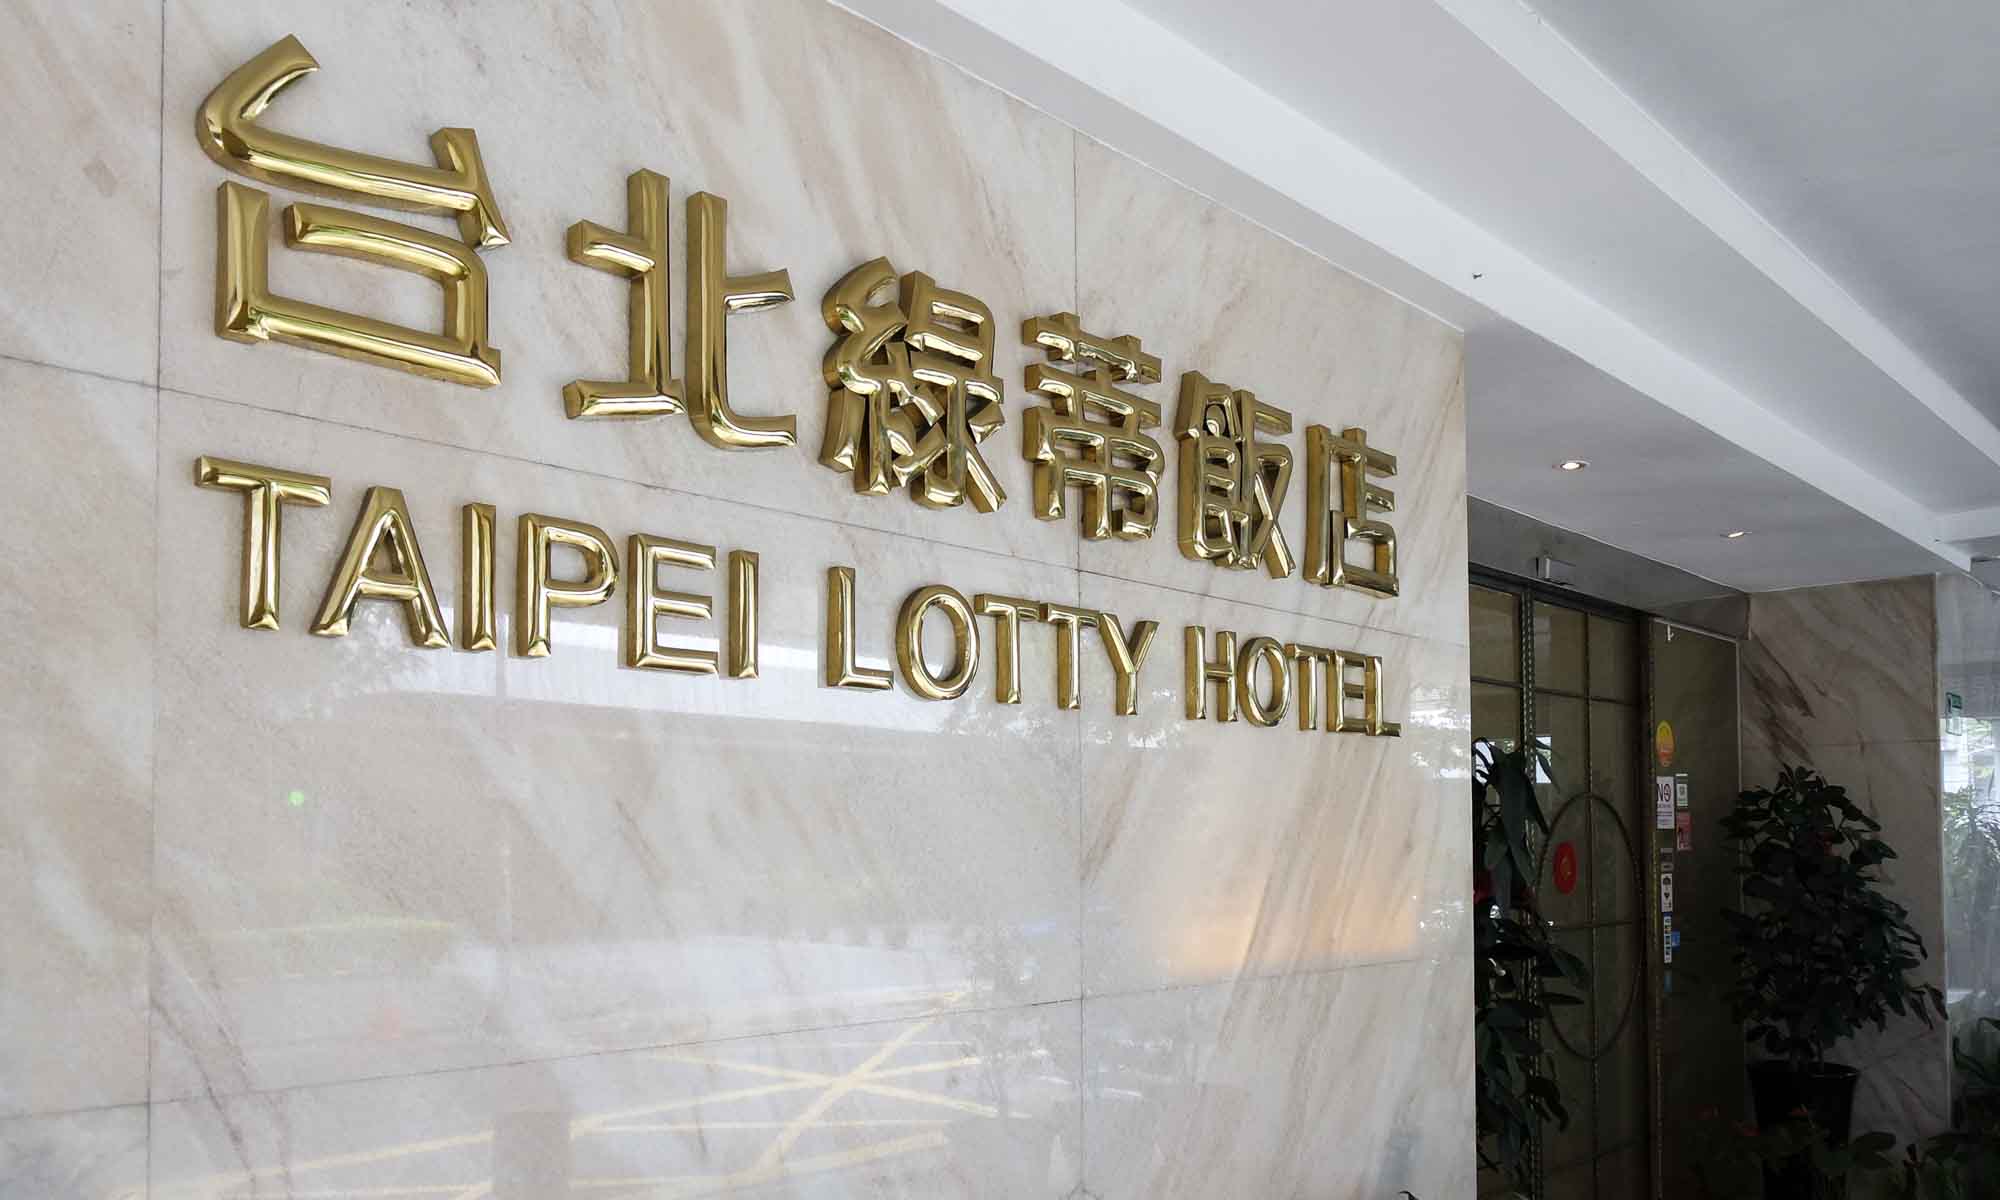 Taipei Lotty Hotel entrance